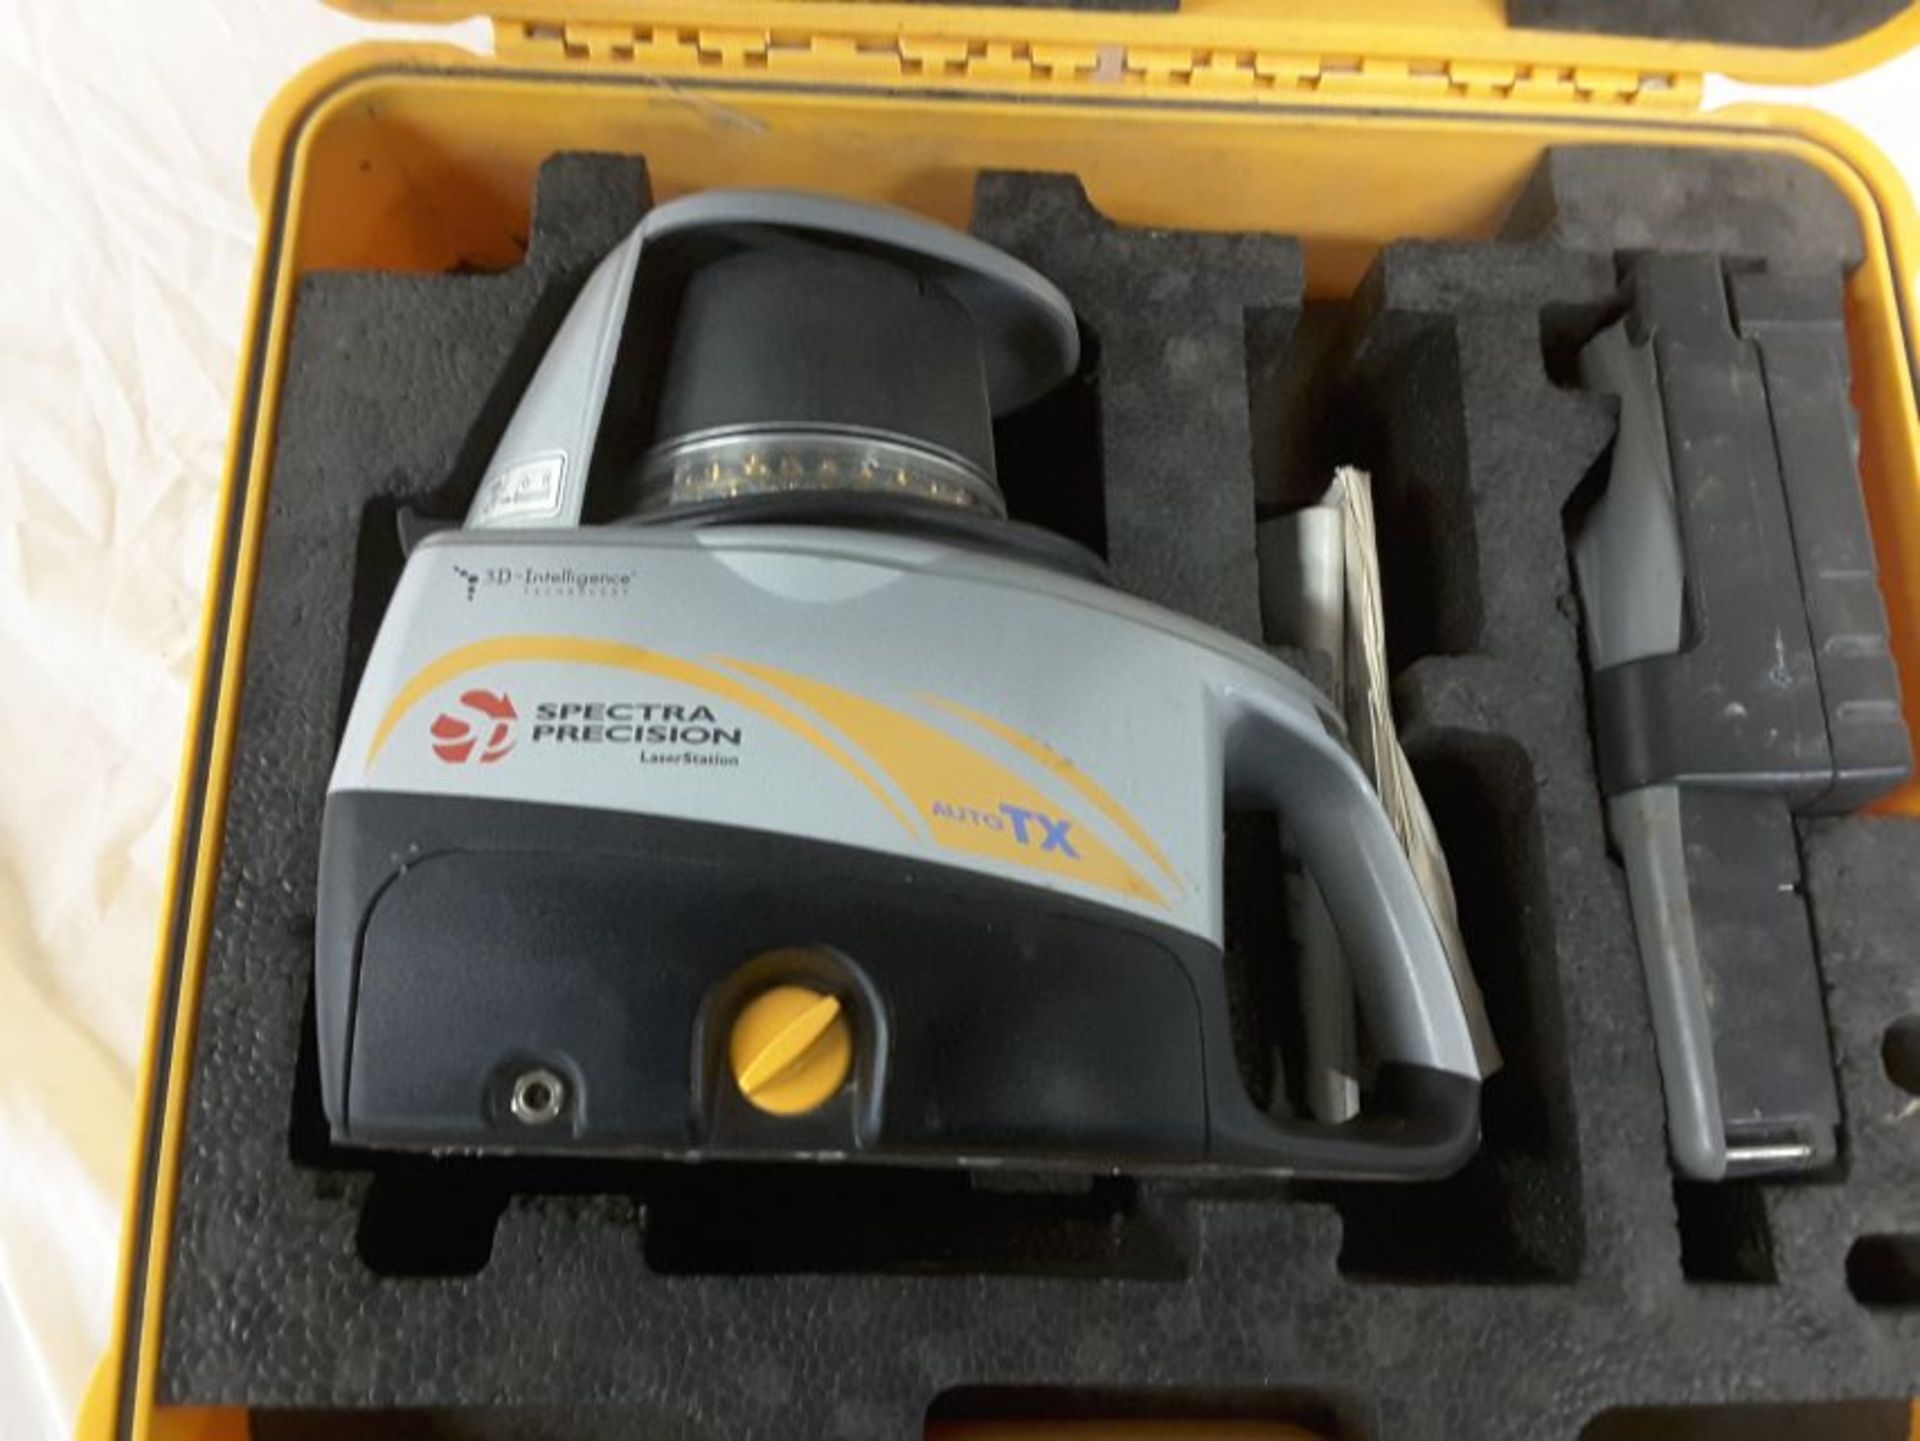 Spectra Precision laser staion model 1043-100 auto TX in hard case